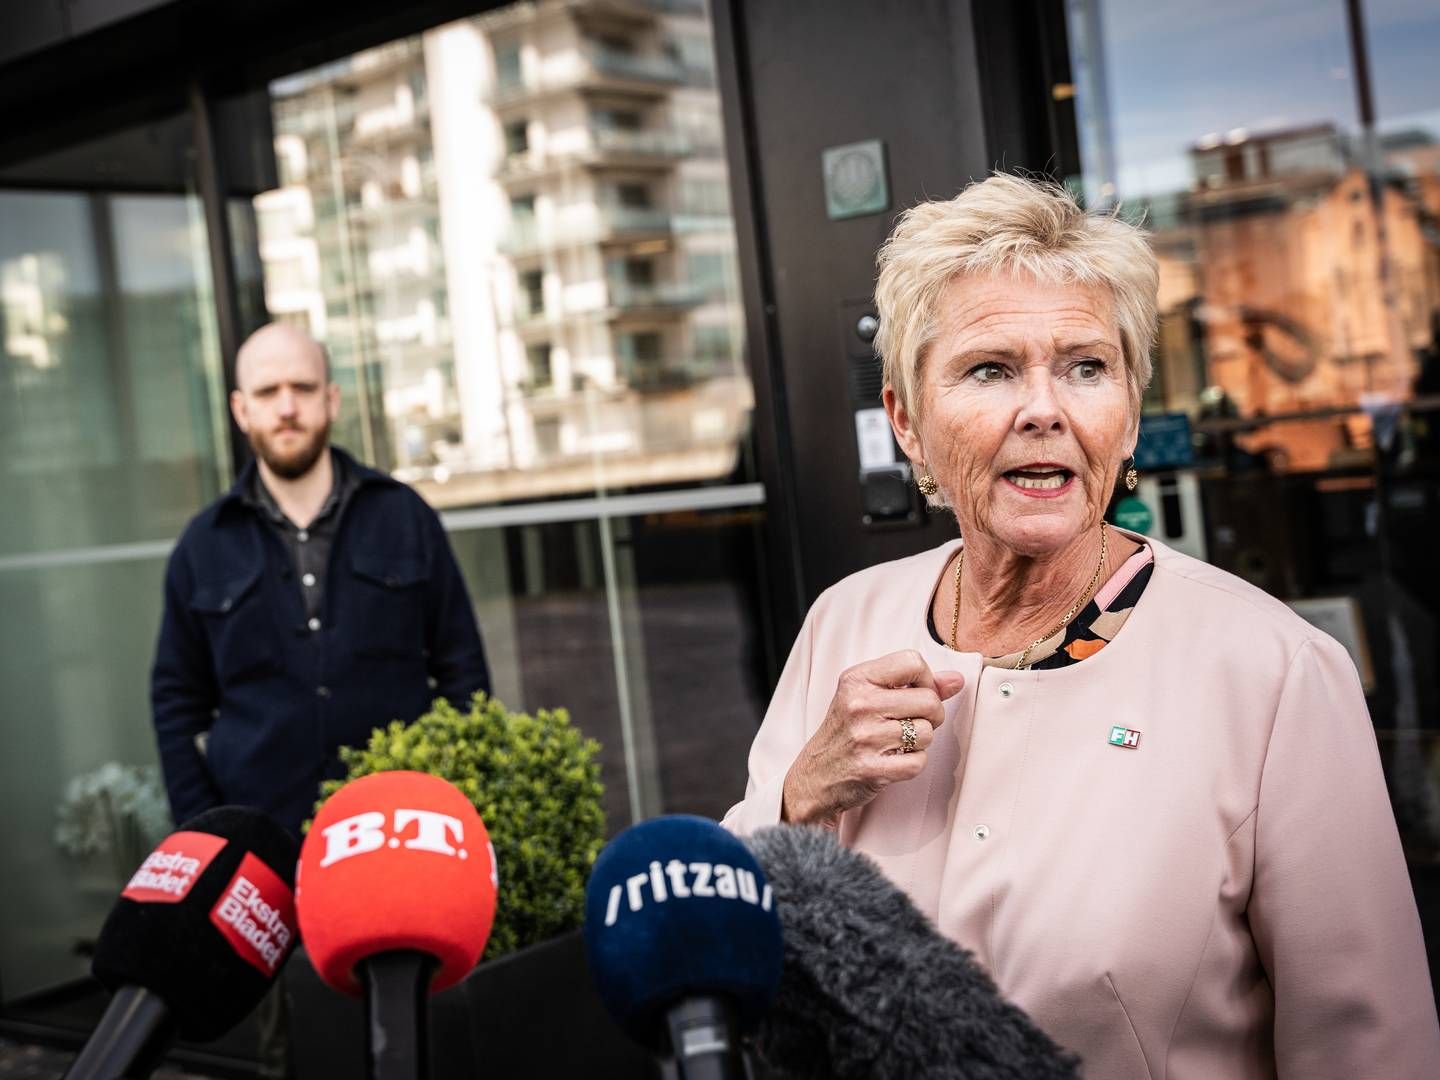 Lizette Risgaard trak sig i weekende fra posten som formand for FH. | Foto: Emil Nicolai Helms/Ritzau Scanpix